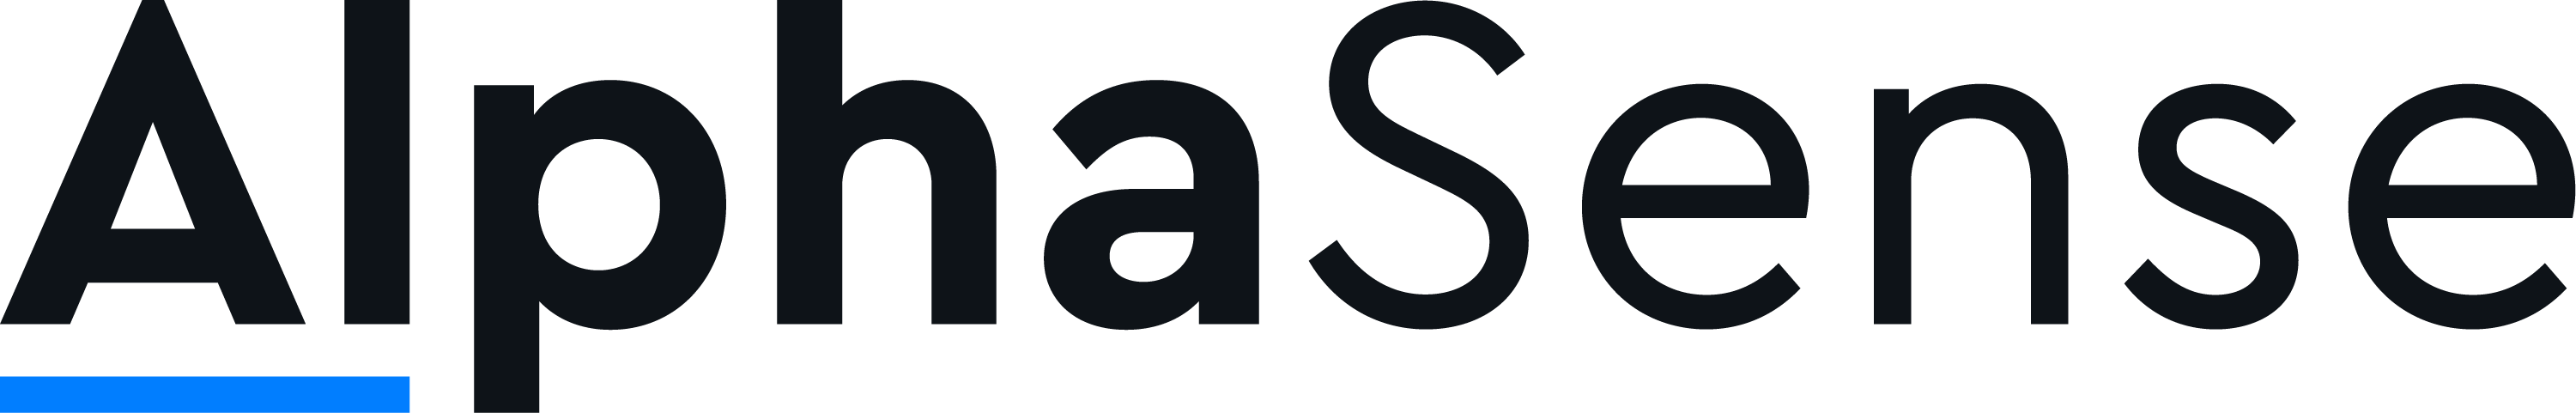 AlphaSense-logo2-773008-edited